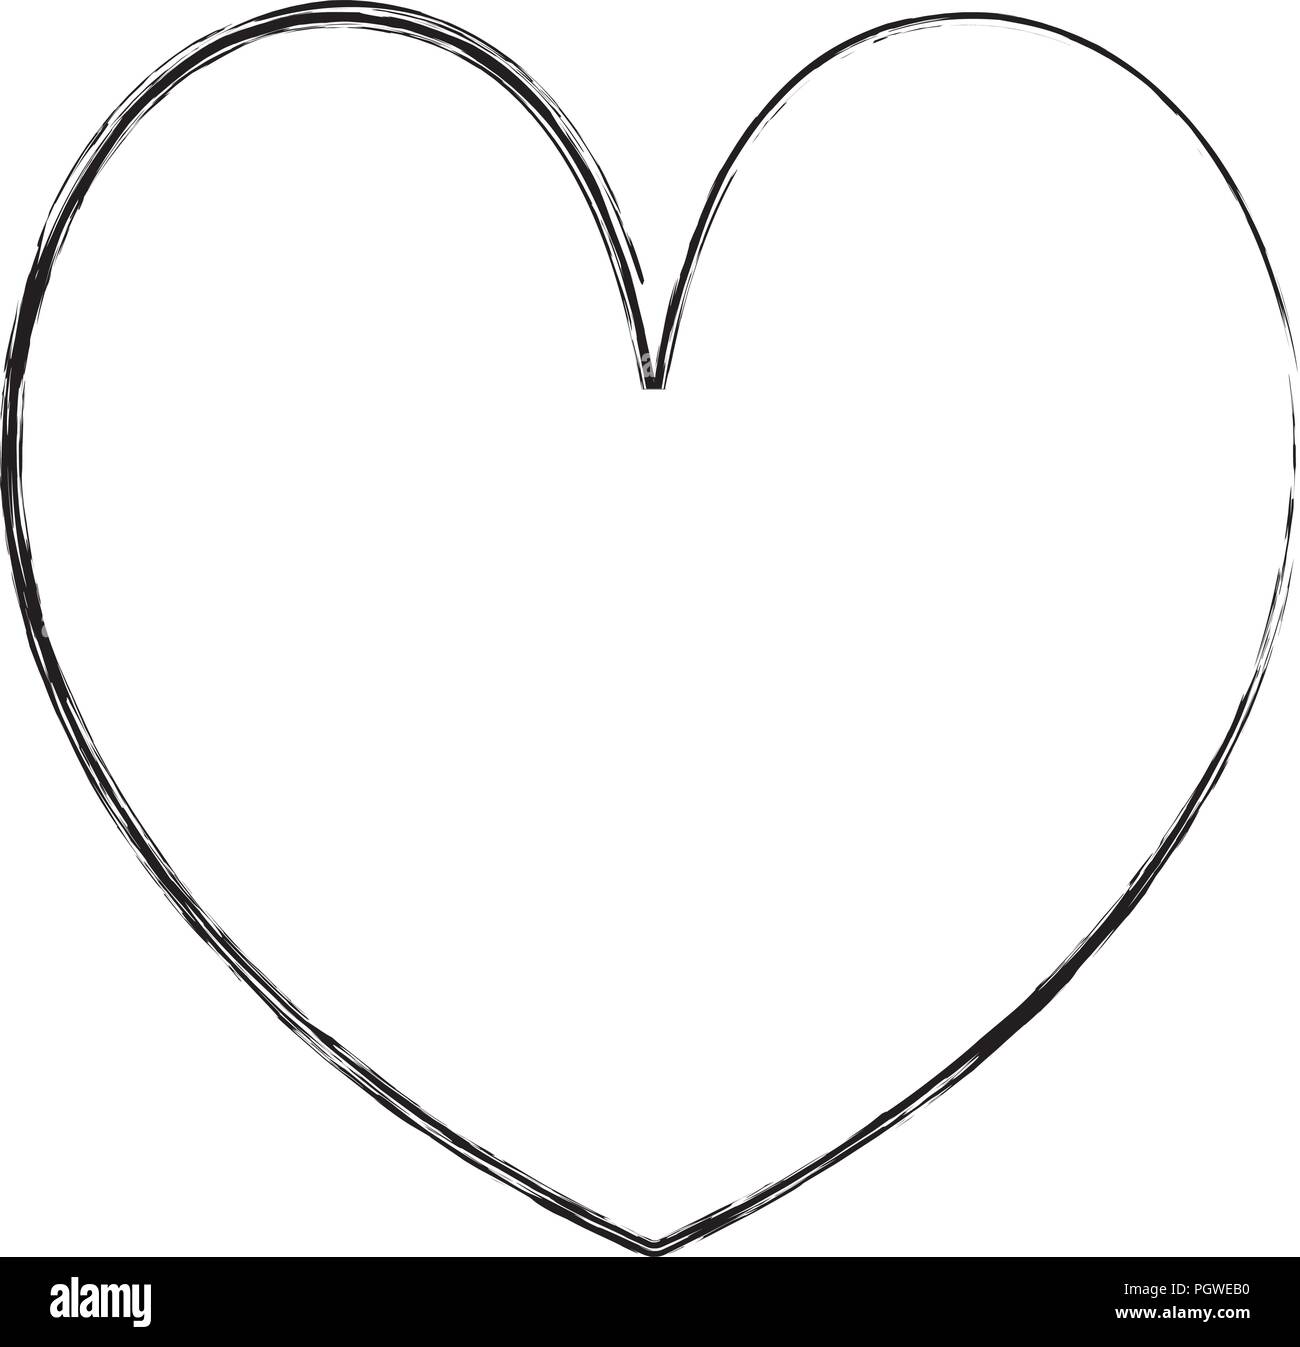 grunge beauty heart romance symbol style Stock Vector